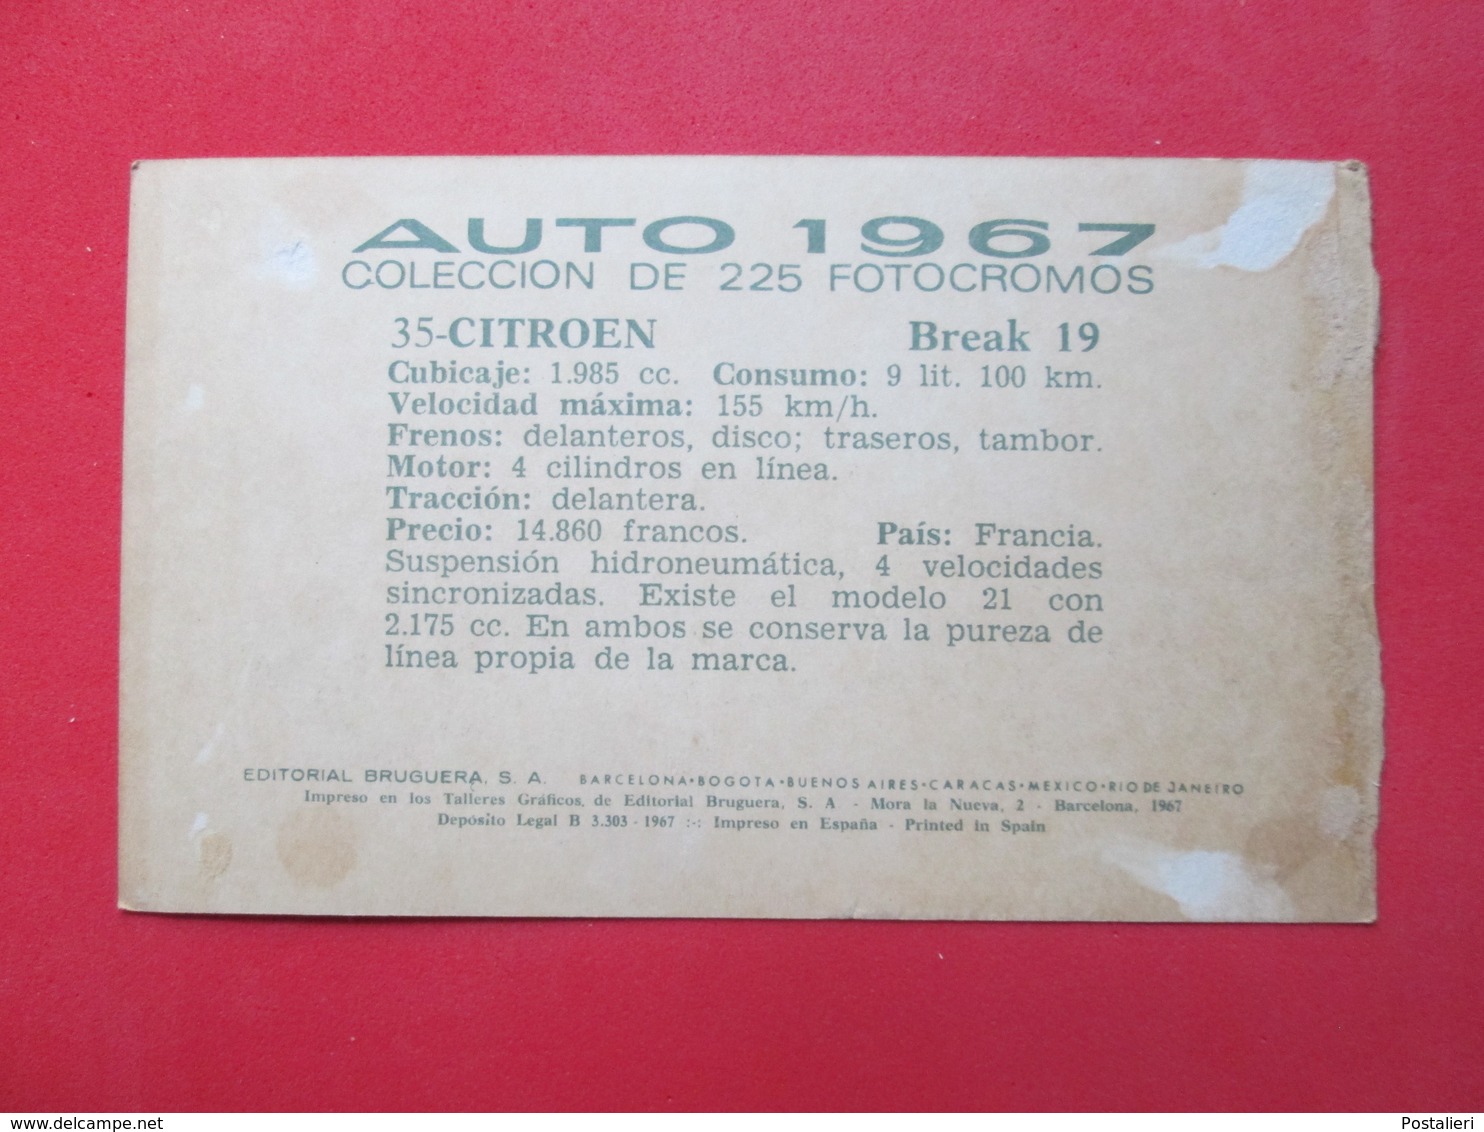 Trading Card (Cromo) - Citroën Break 19 - Nº 35 - Col. Autos 1967 - Ed. Bruguera 1967 - (Spain) / France - Automobili